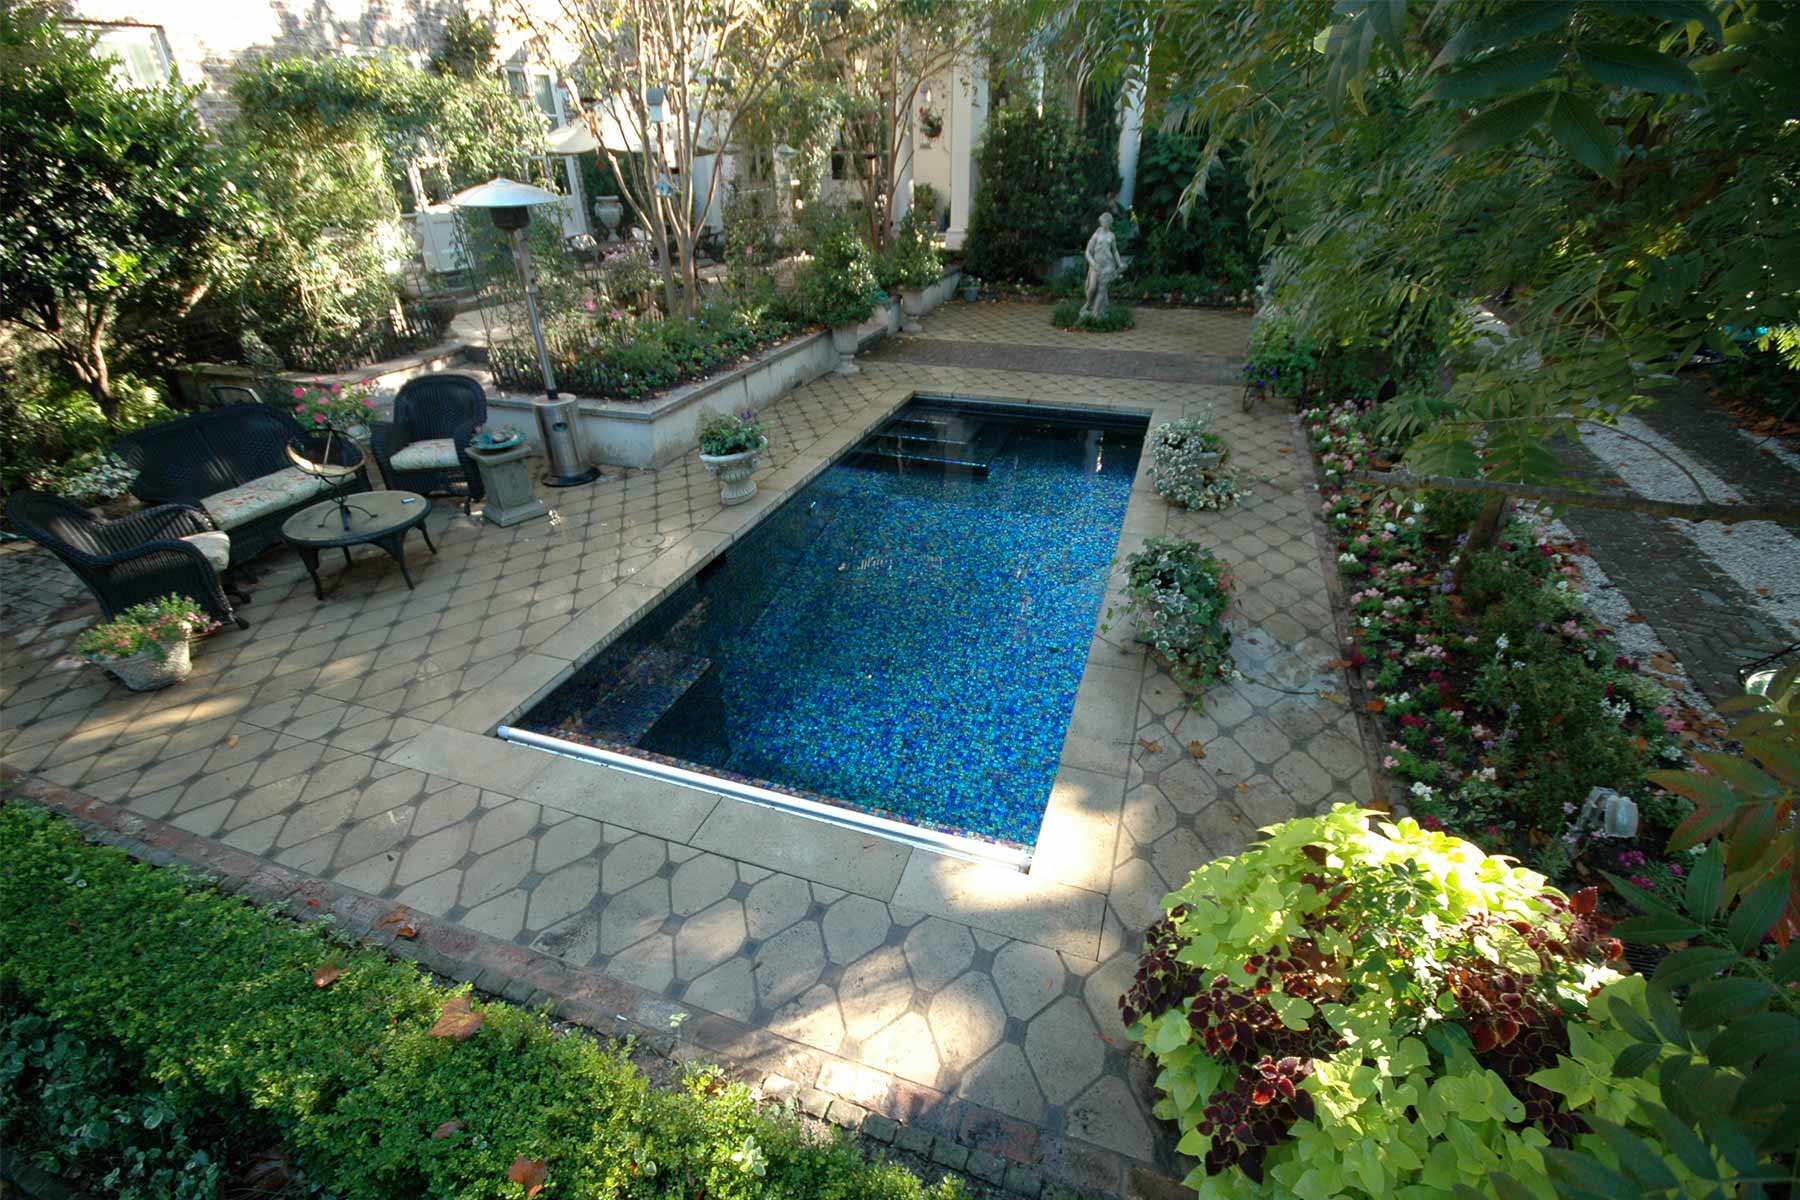 The pool deck design features custom concrete diamond pavers